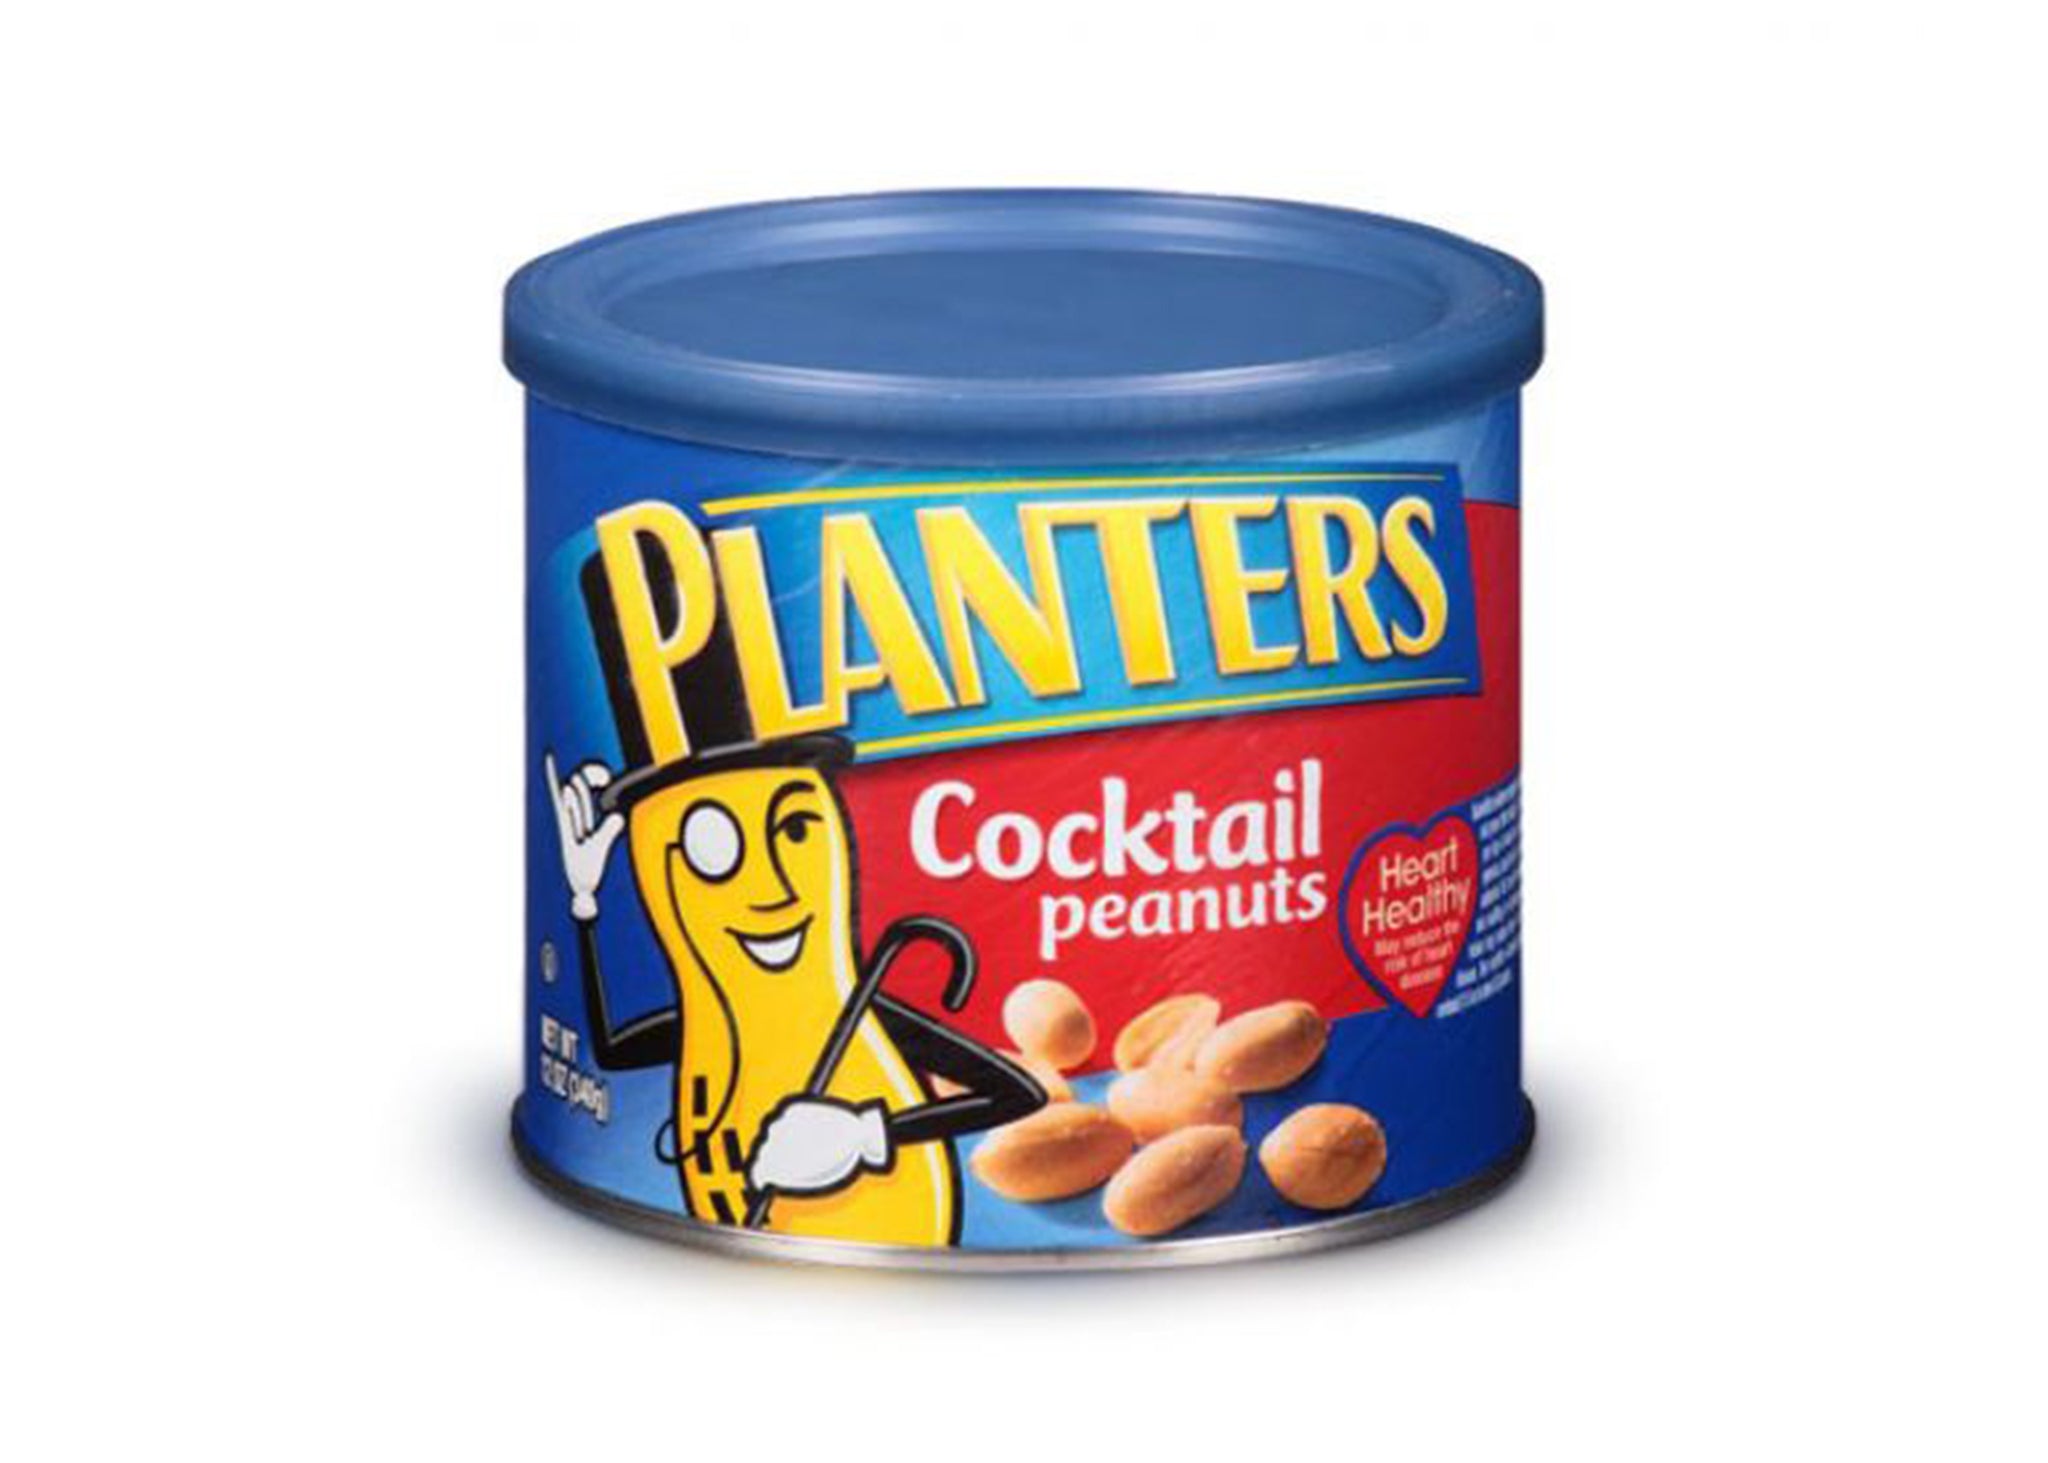 stl>Planters Peanuts - 10.3oz